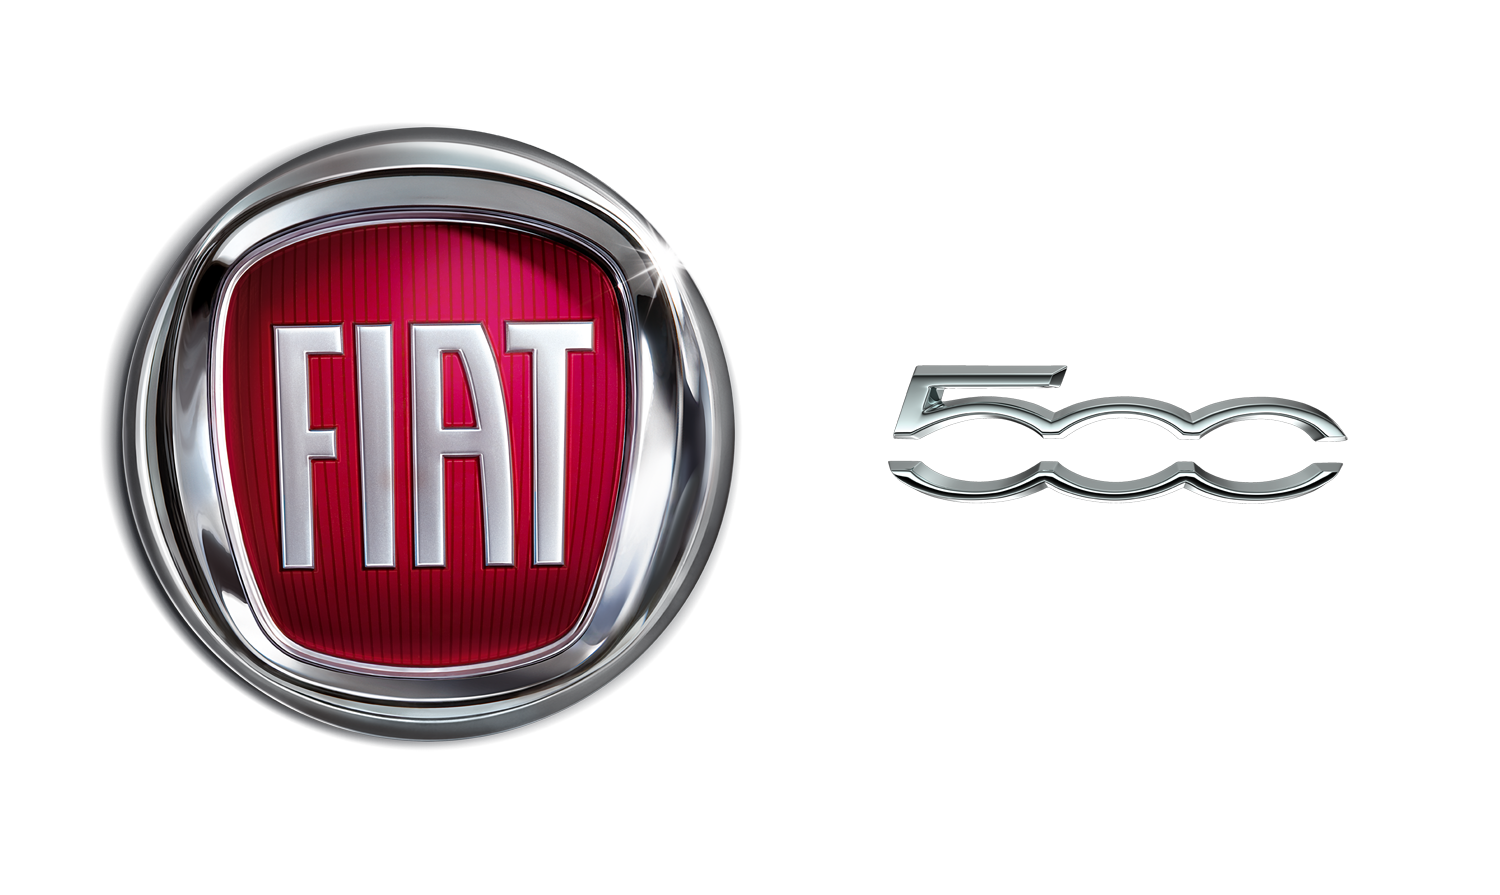 FIAT - logo novo 2009 photo - 1